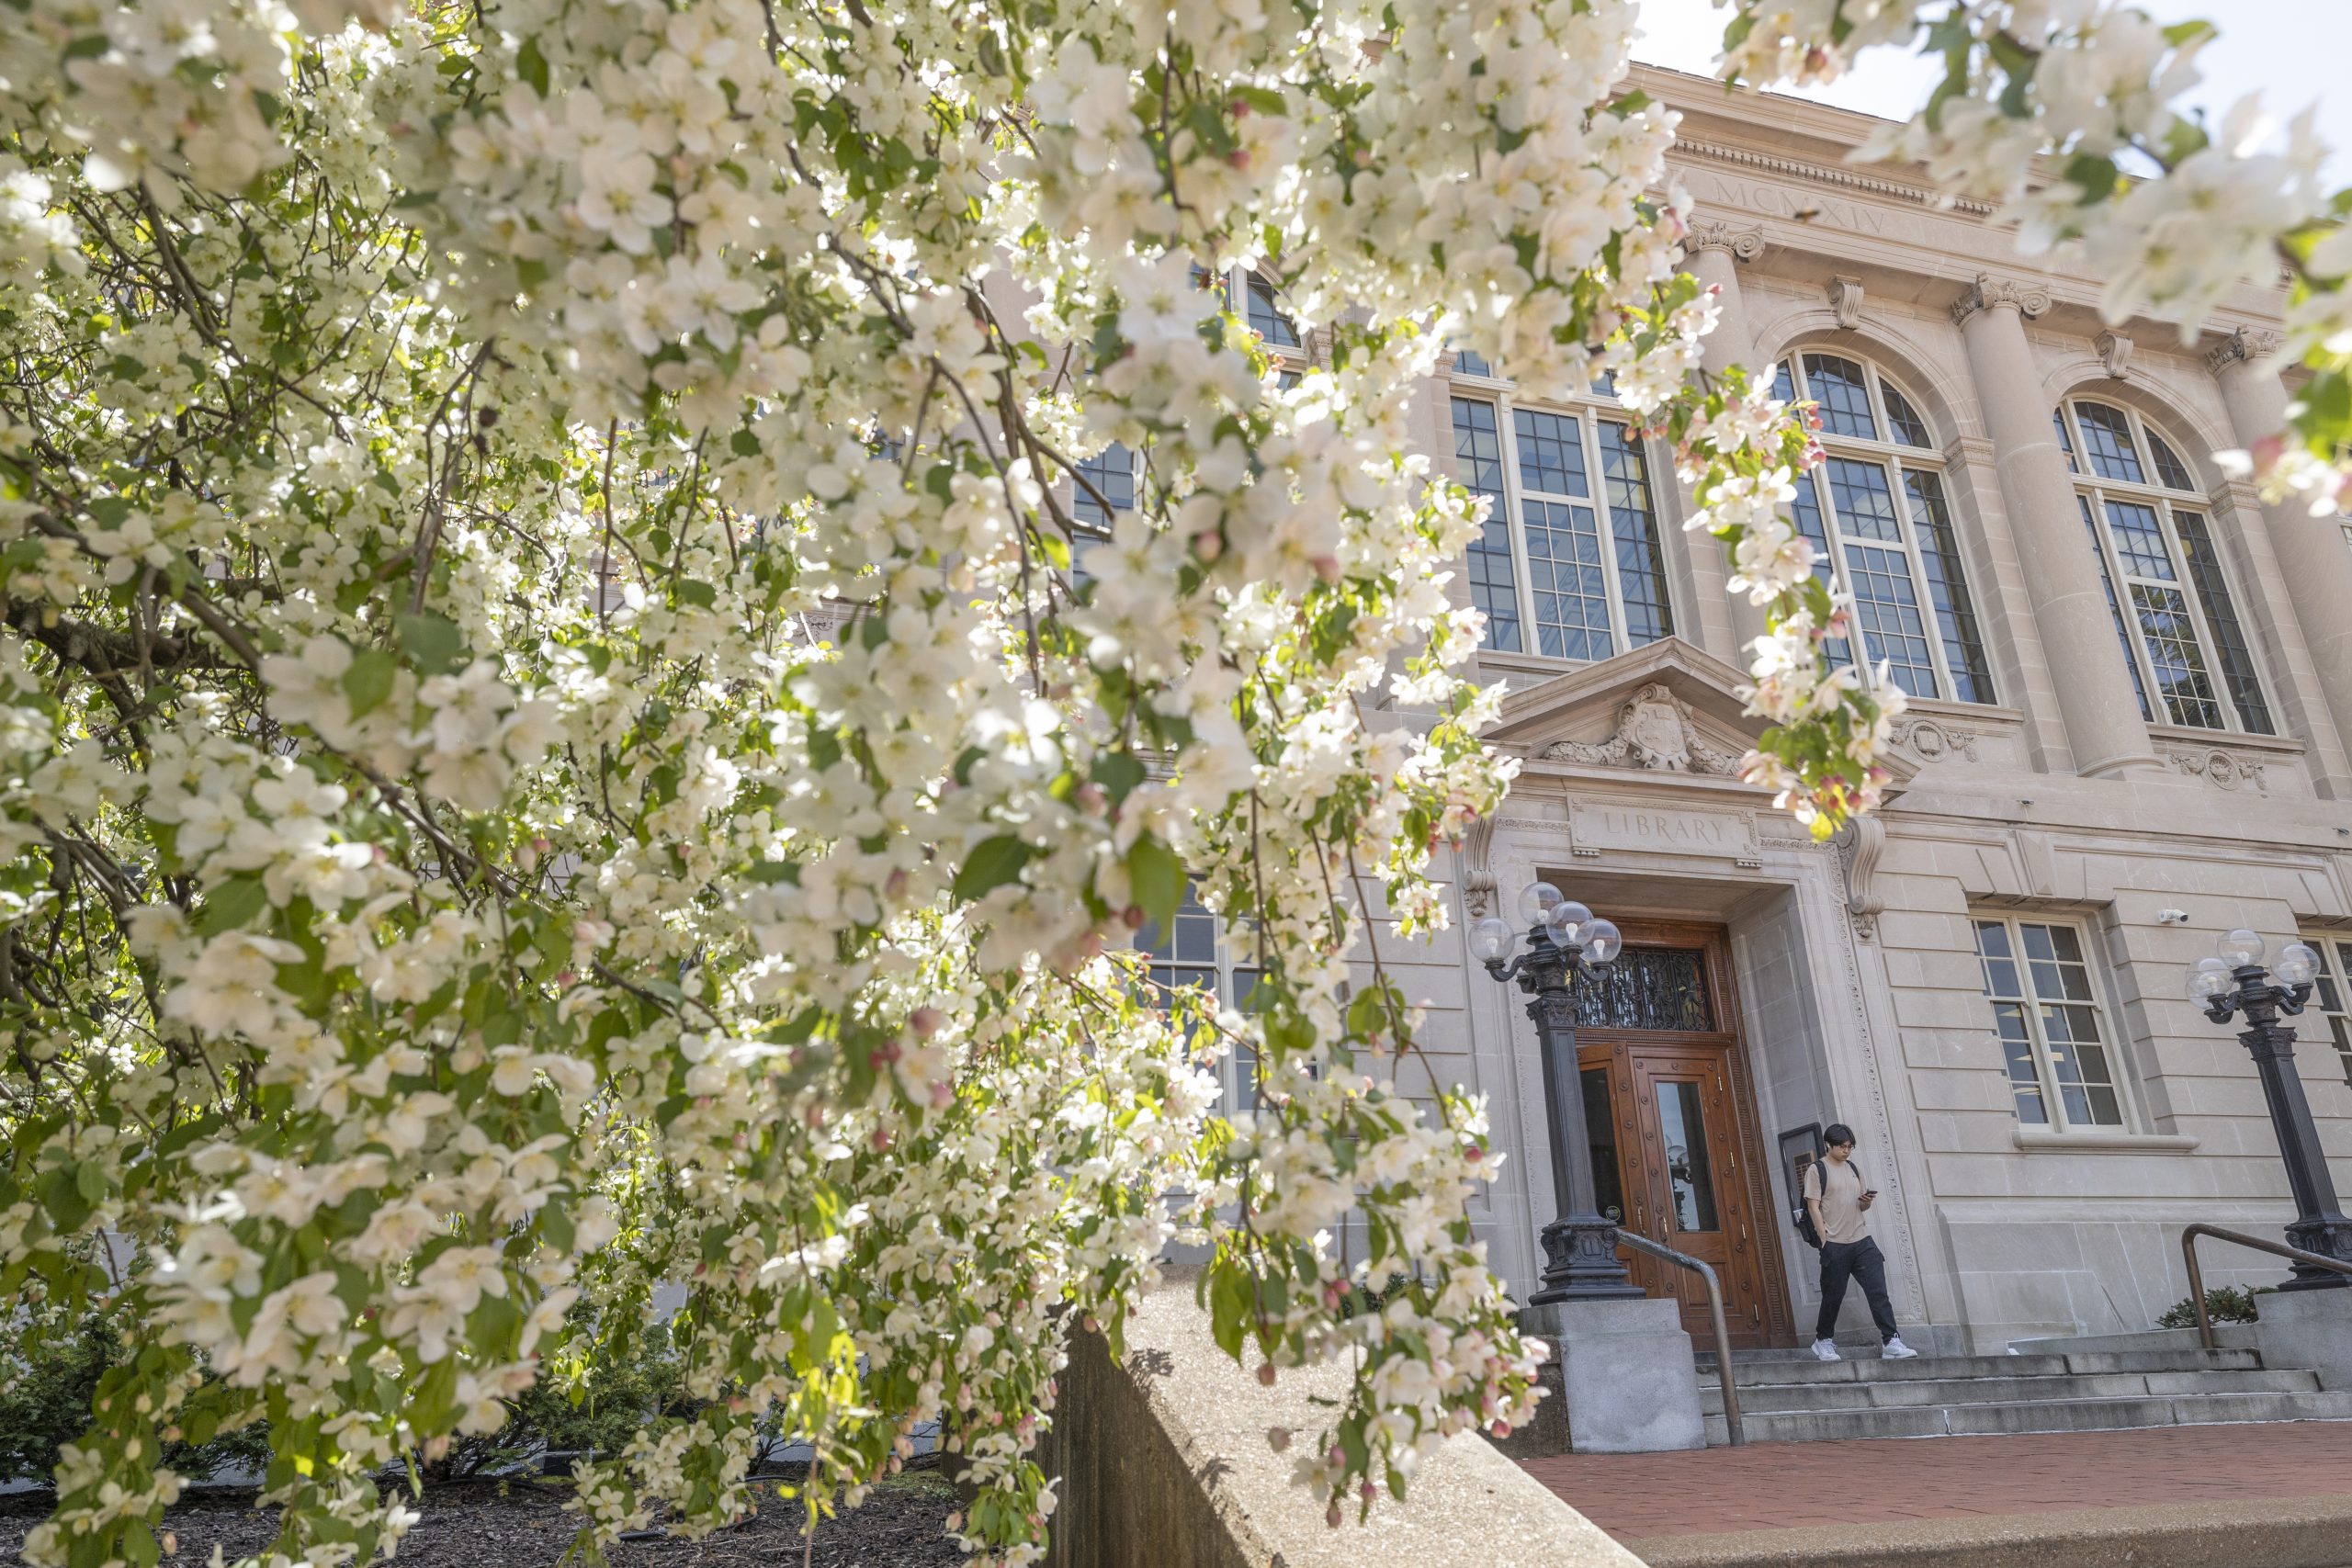 Students walk past spring flowers near Ellis Library